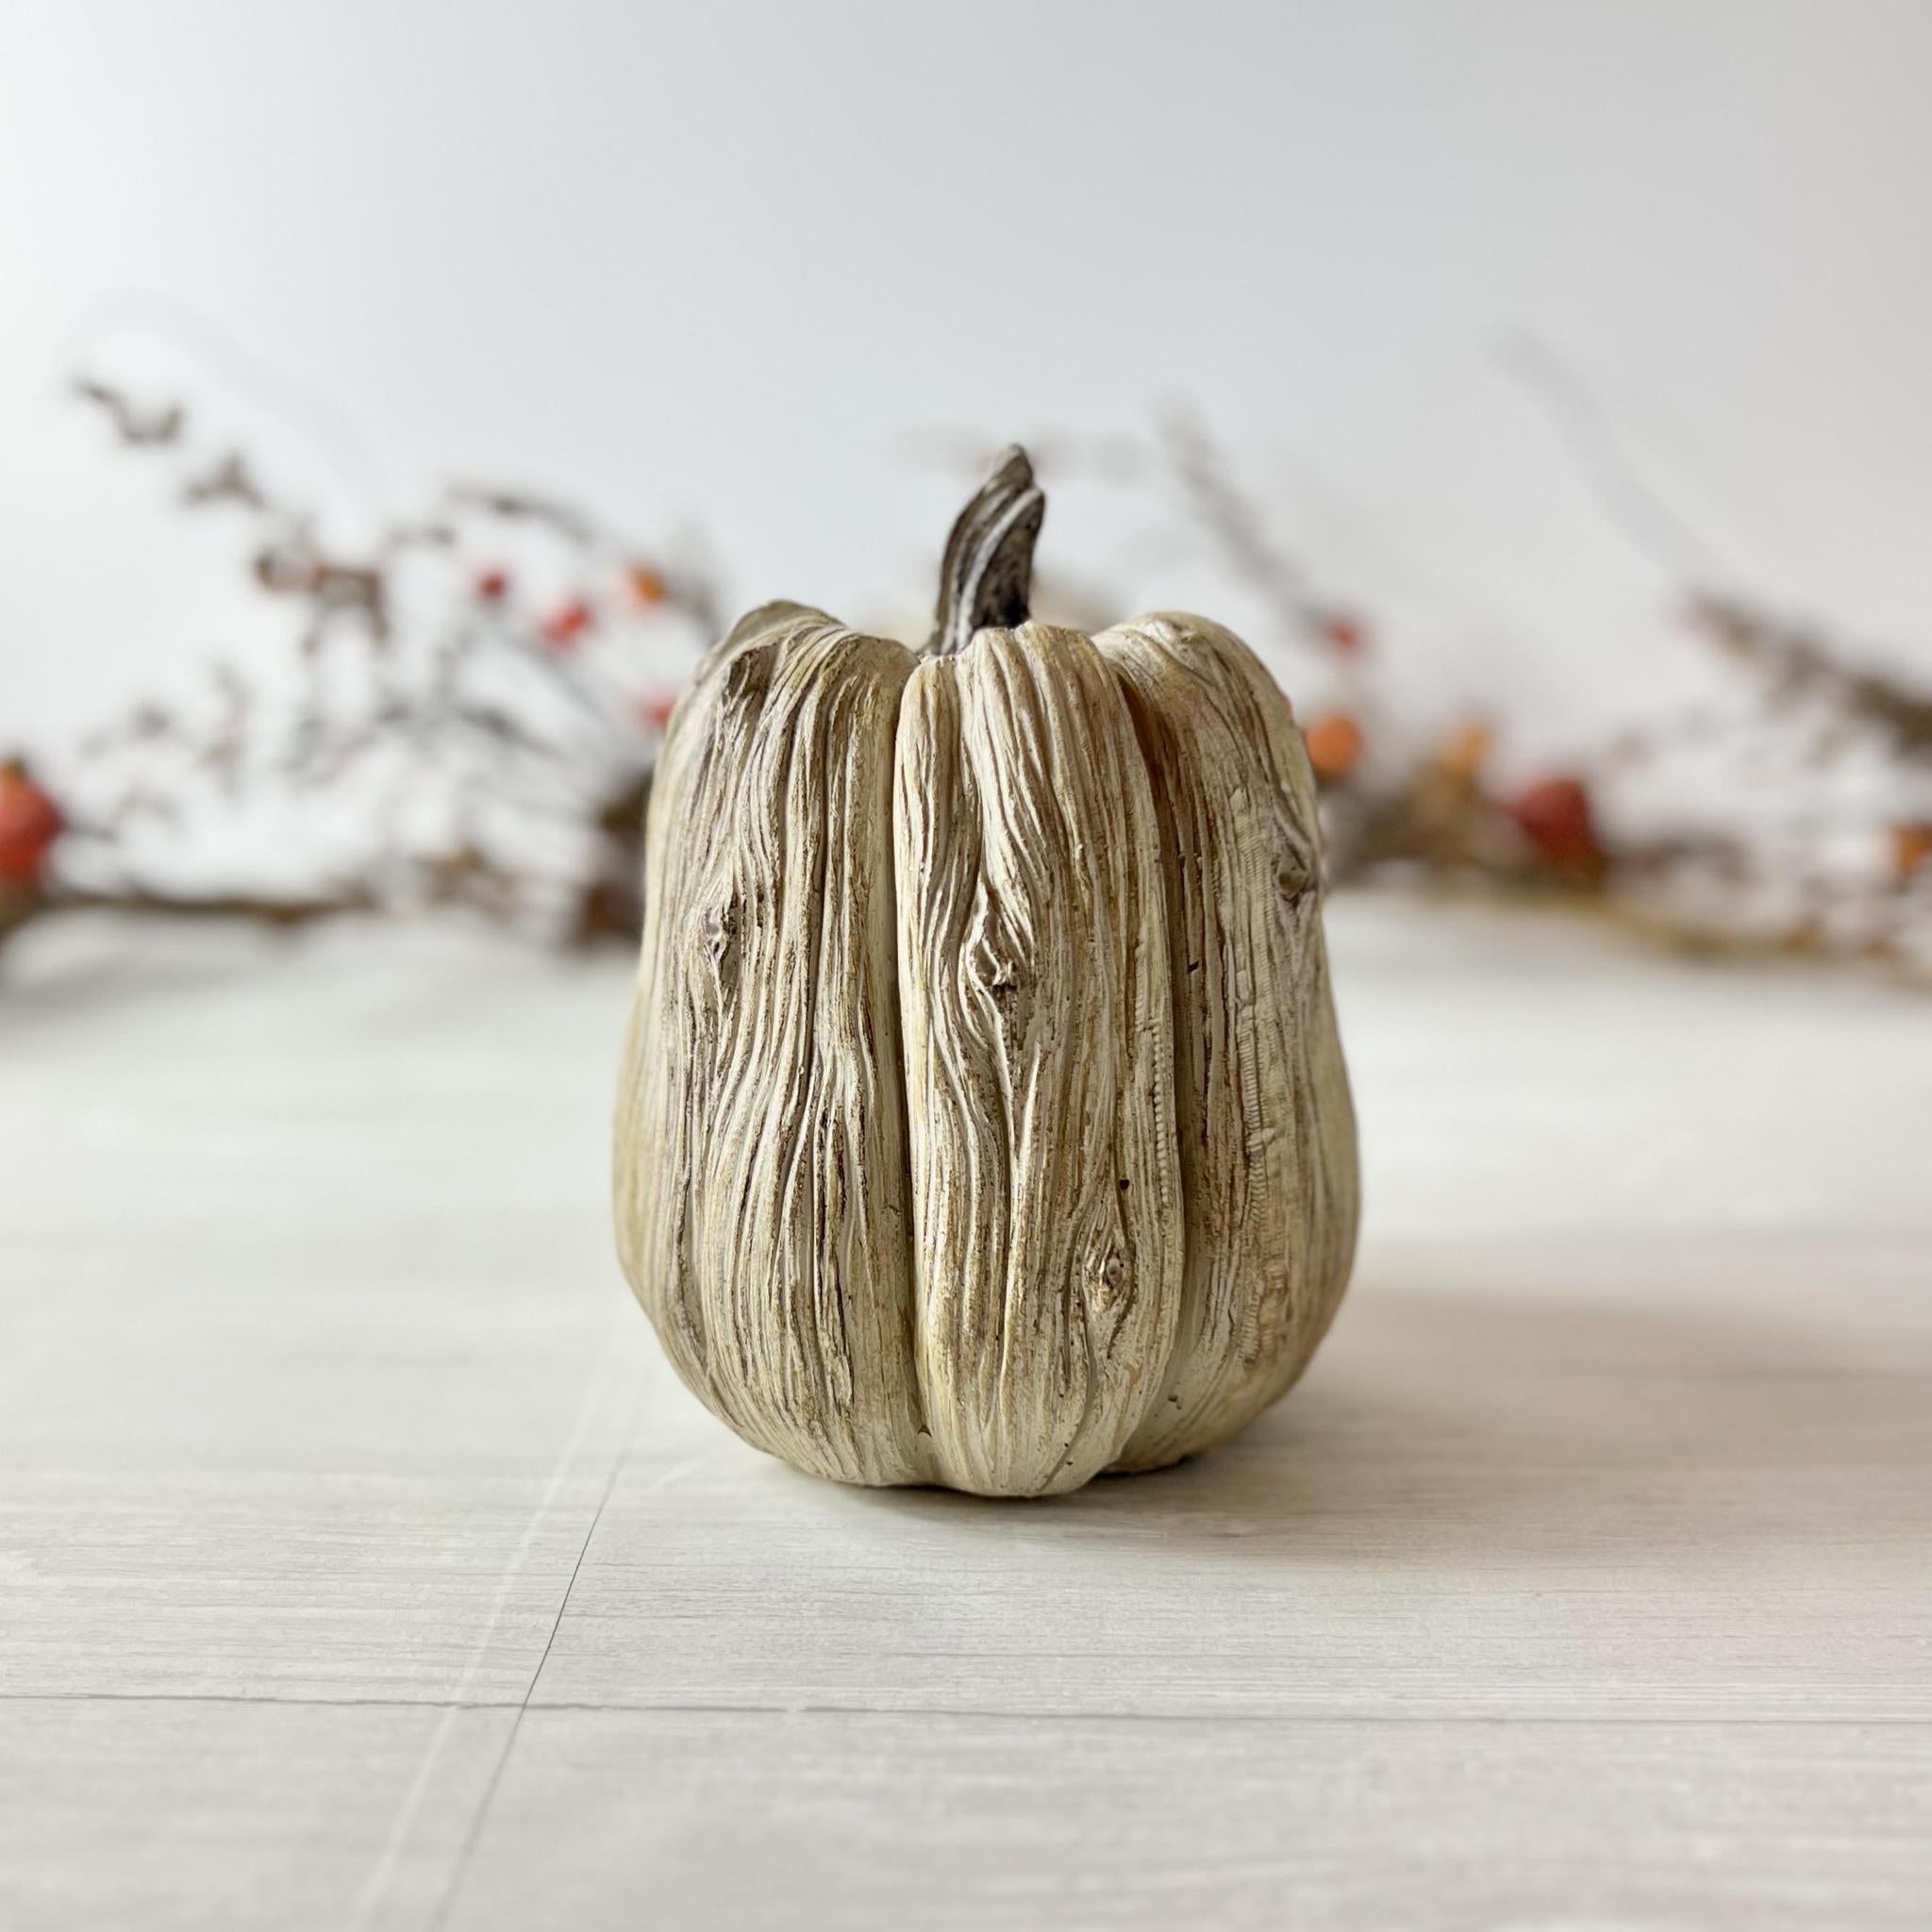 Wood Grain Pumpkin - 6"H